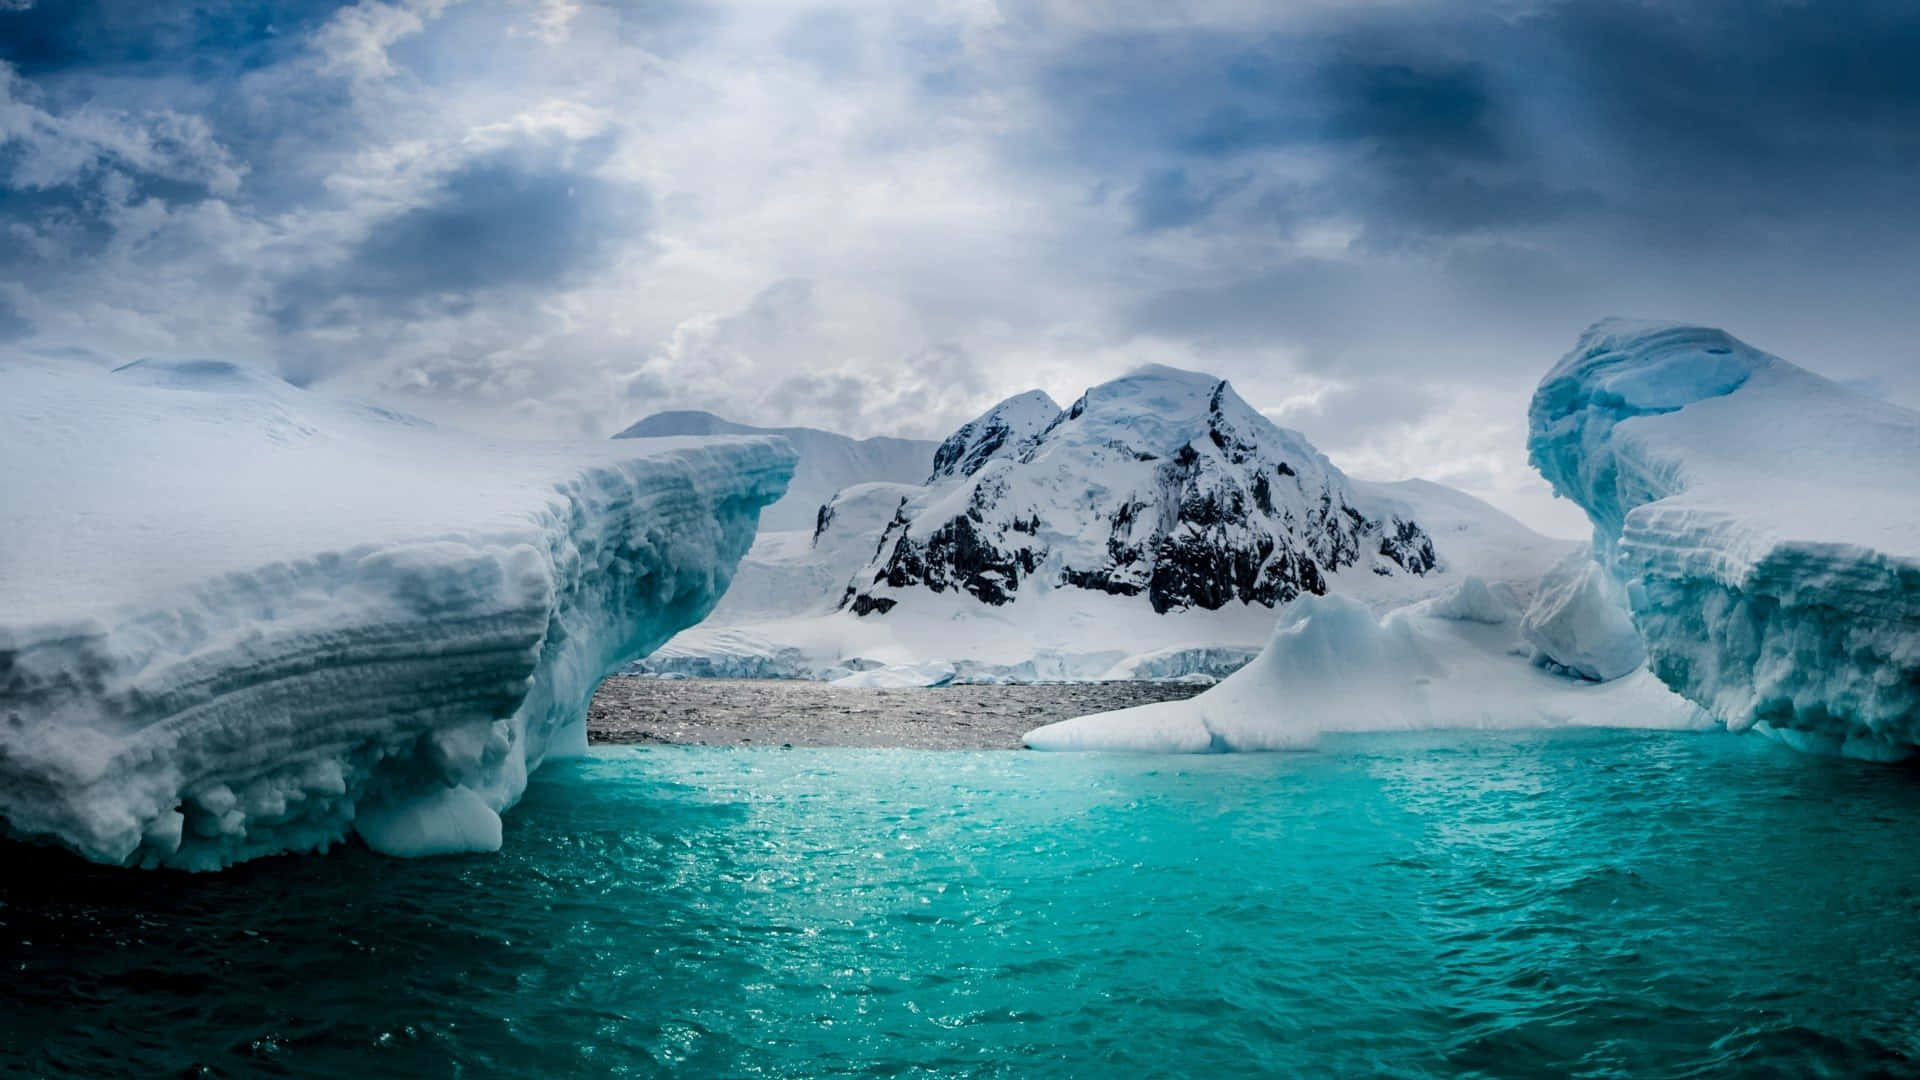 Majestic Mountains Overlooking Icebergs in Antarctica